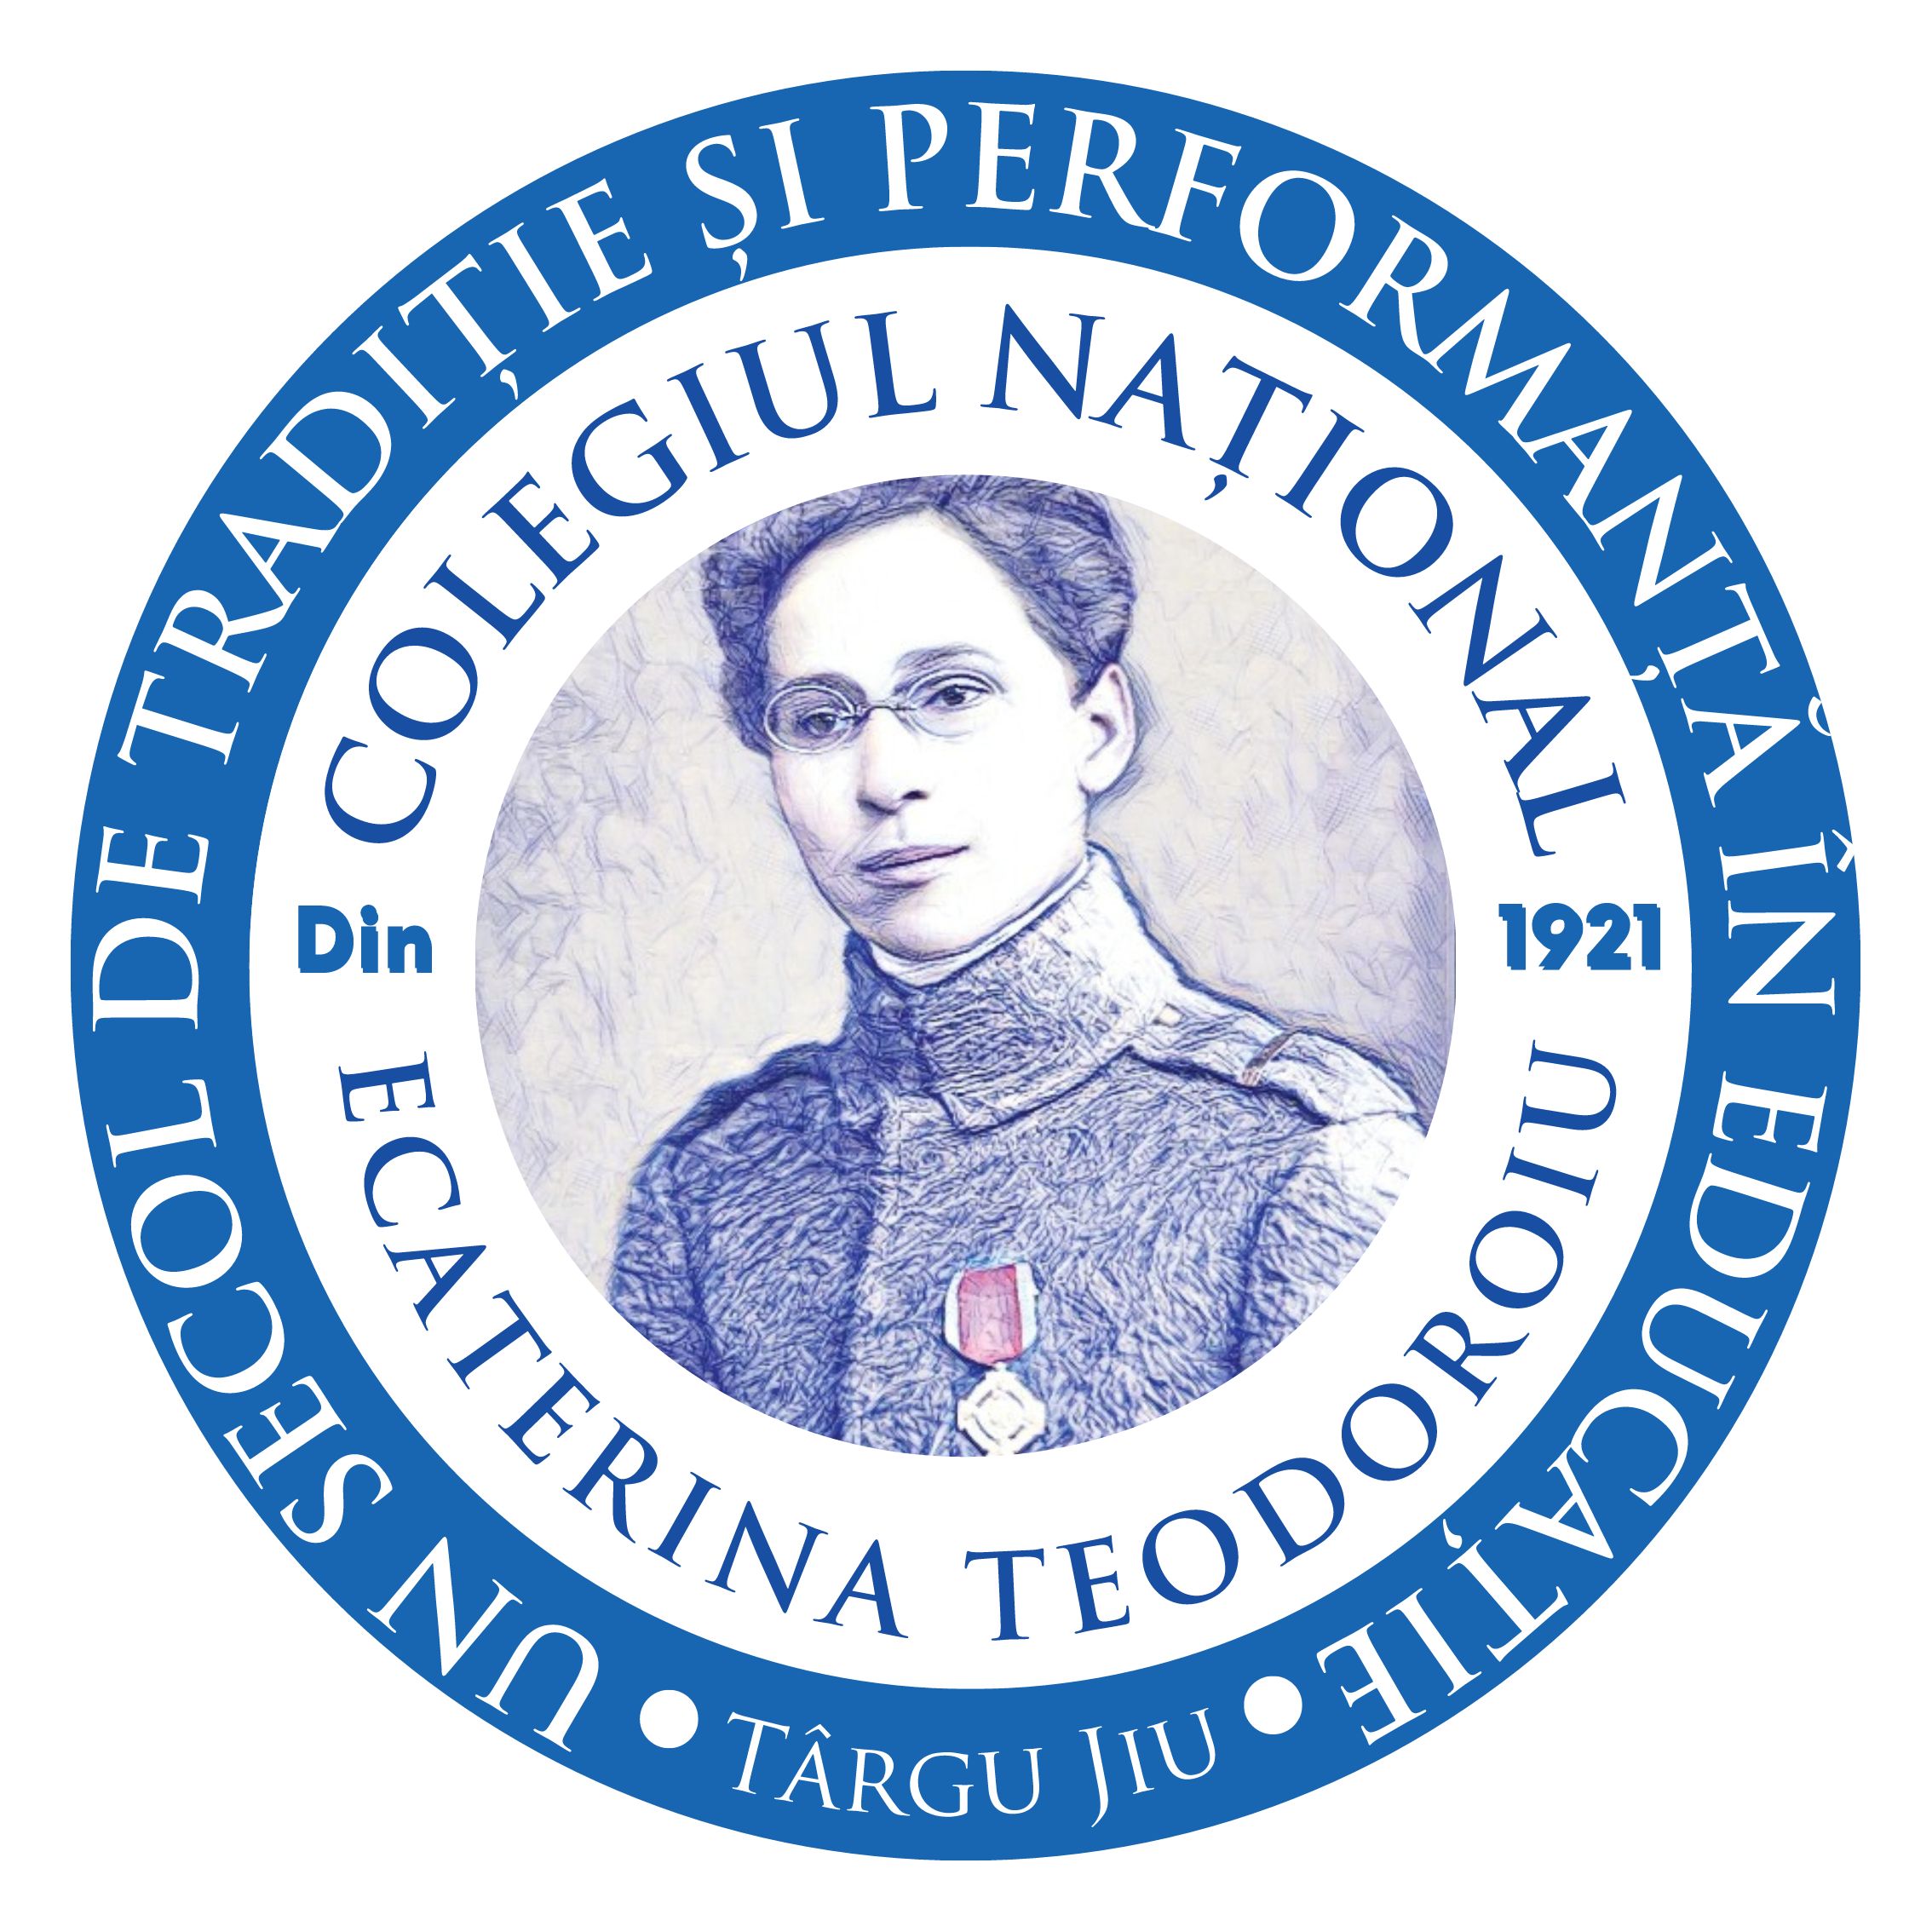 1 Decembrie 1918 – 2009